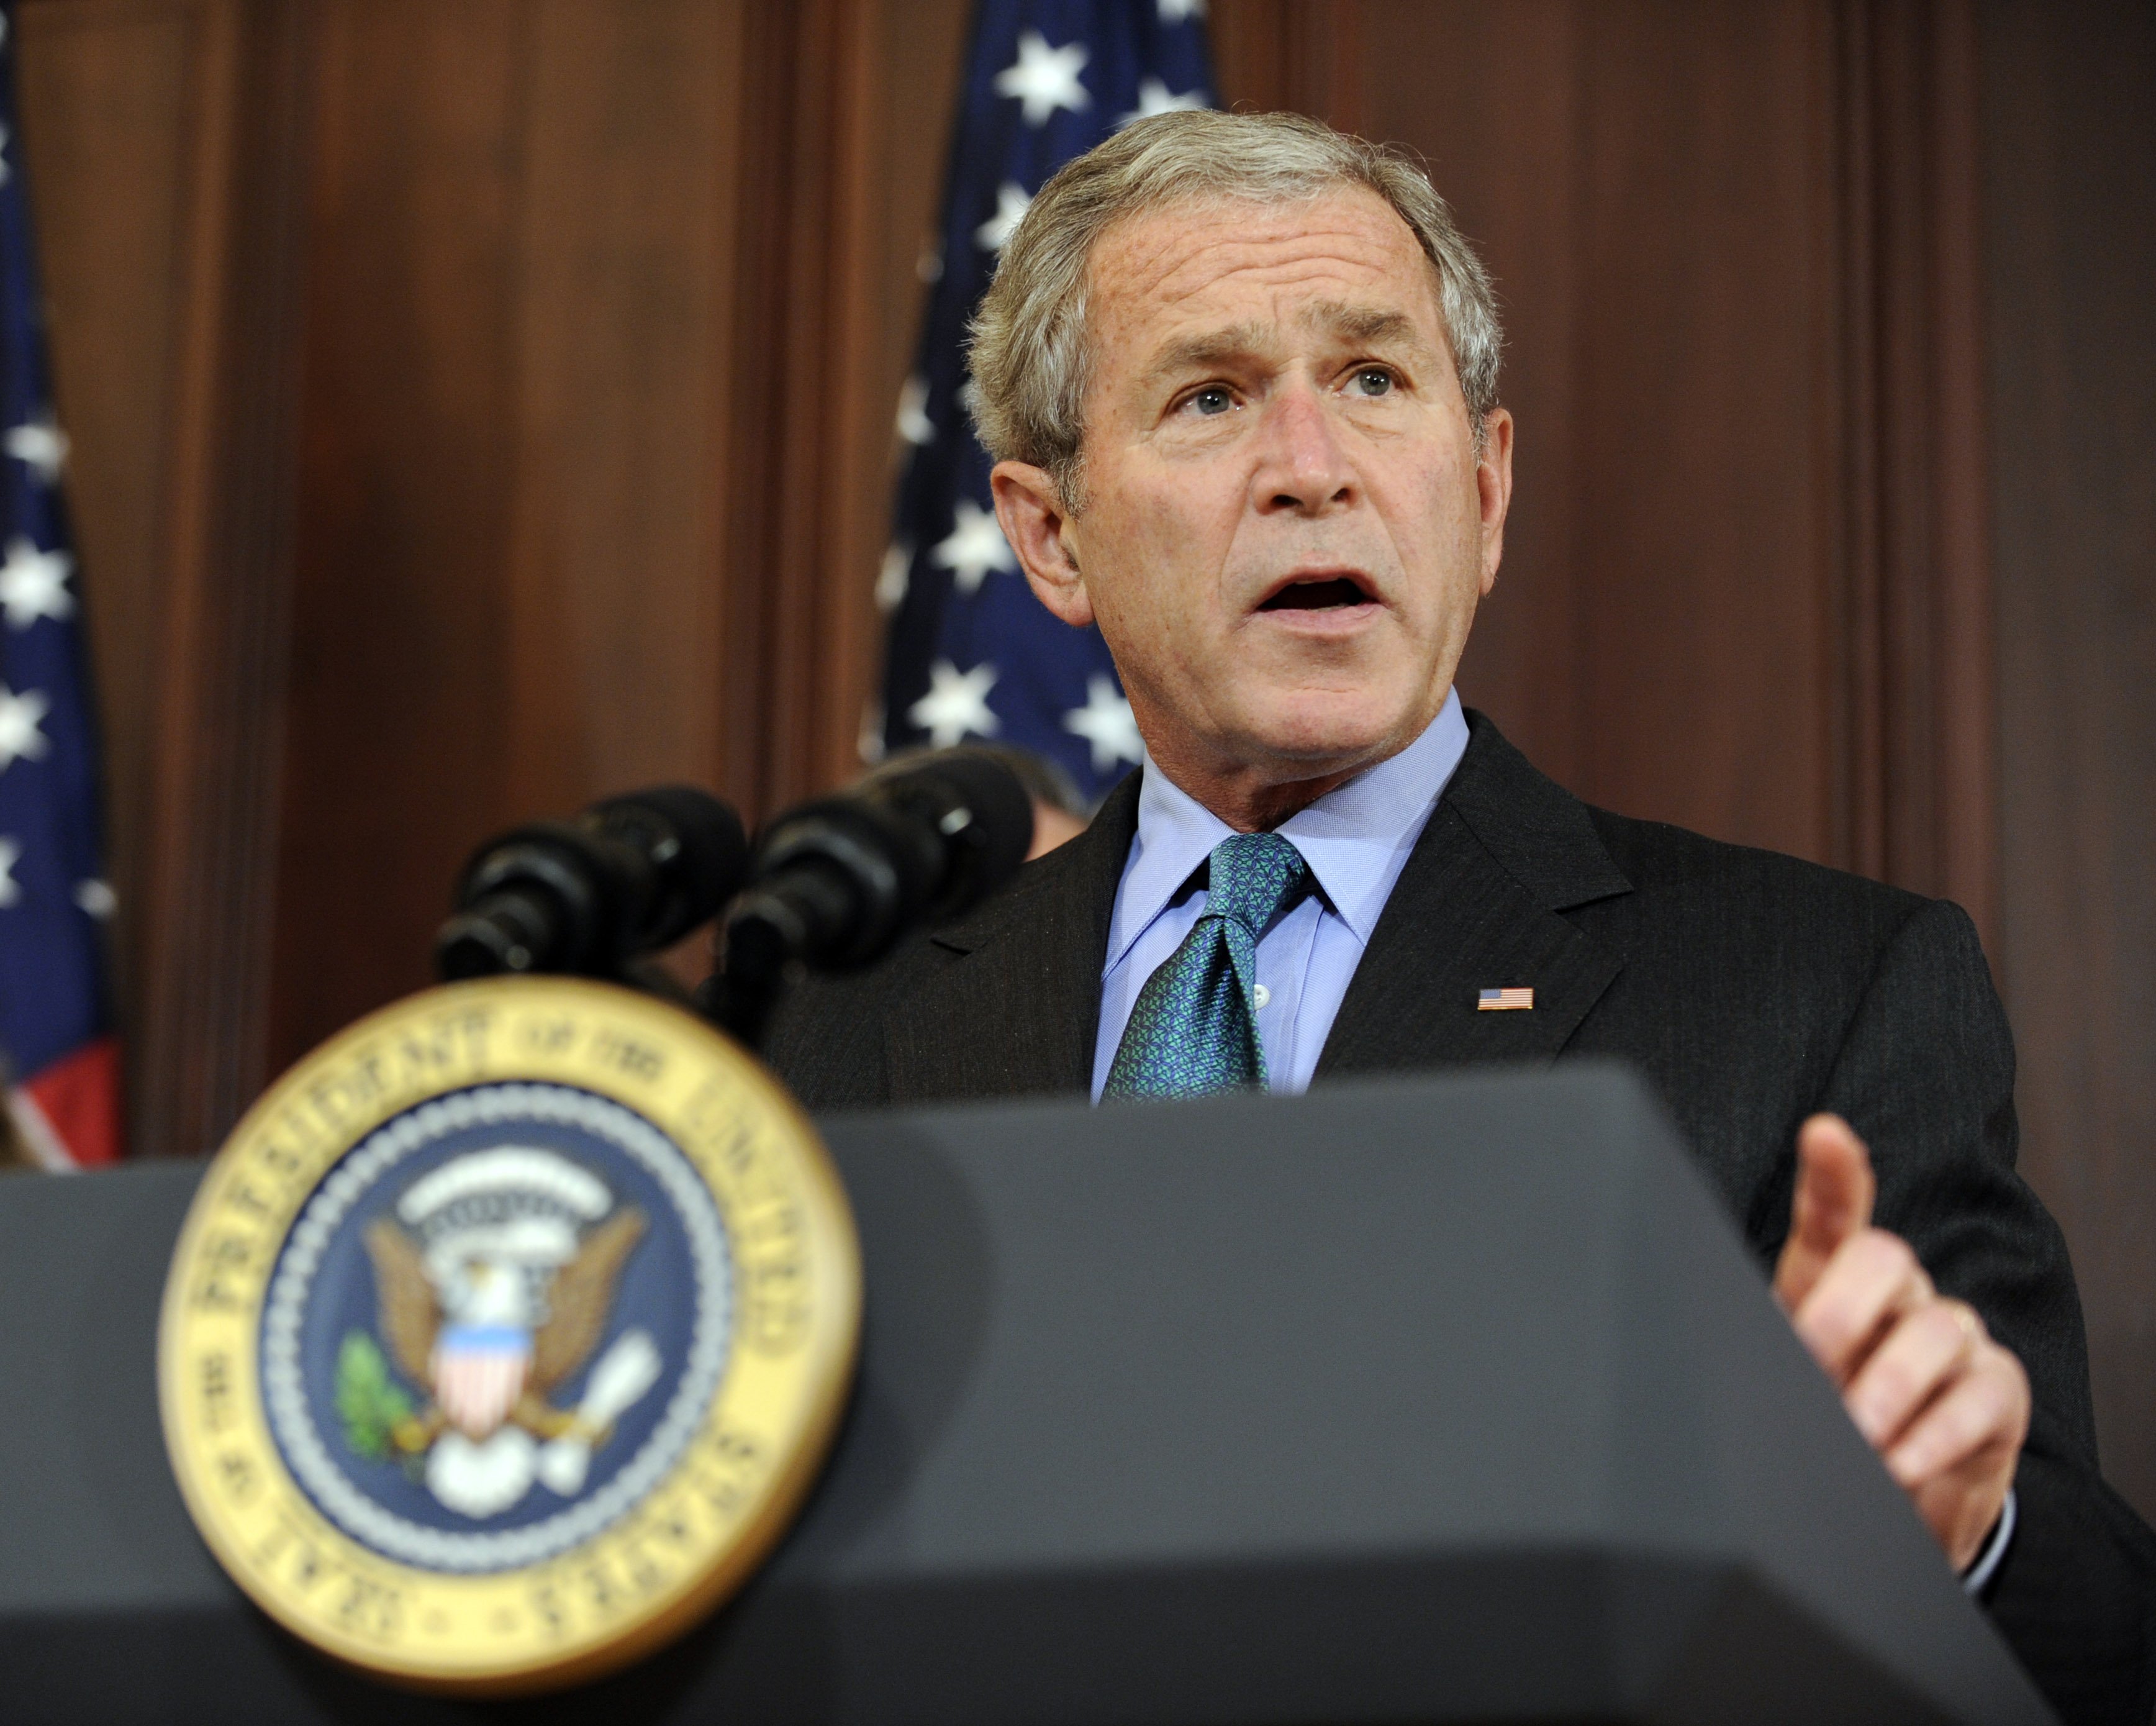 Krig, Brott och straff, Politik, George W Bush, Wikileaks, Barack Obama, USA